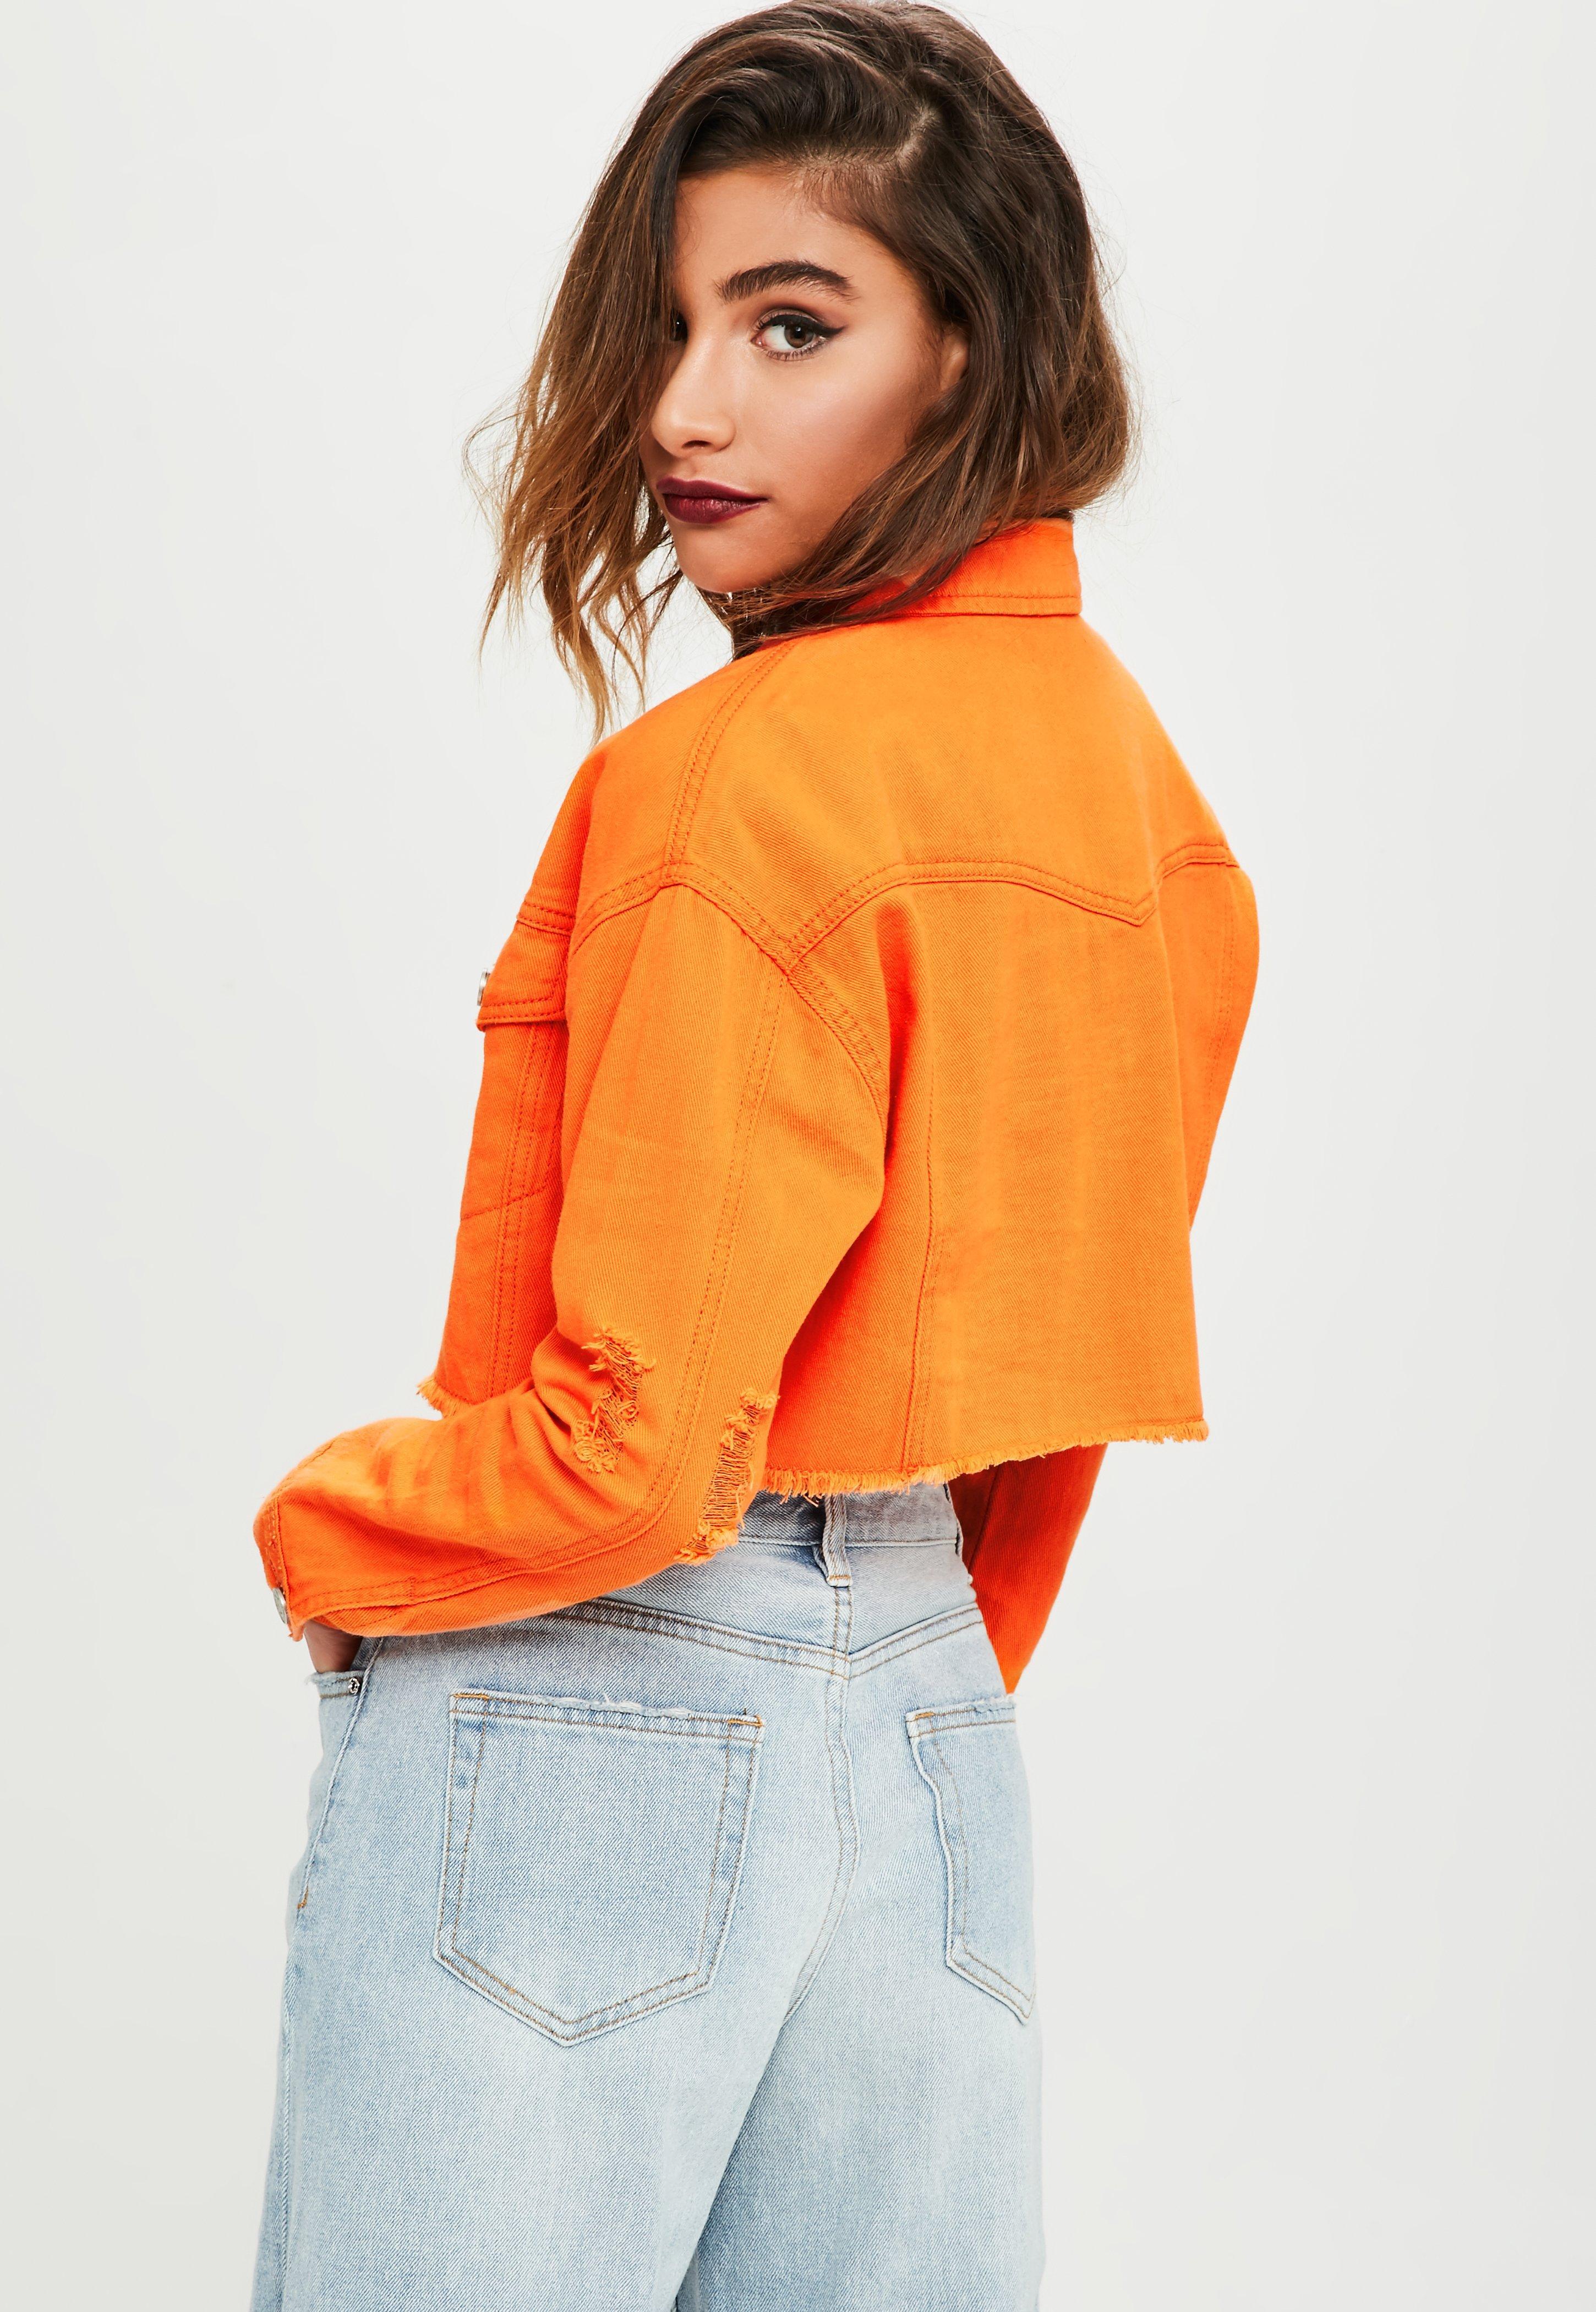 orange denim jacket outfit